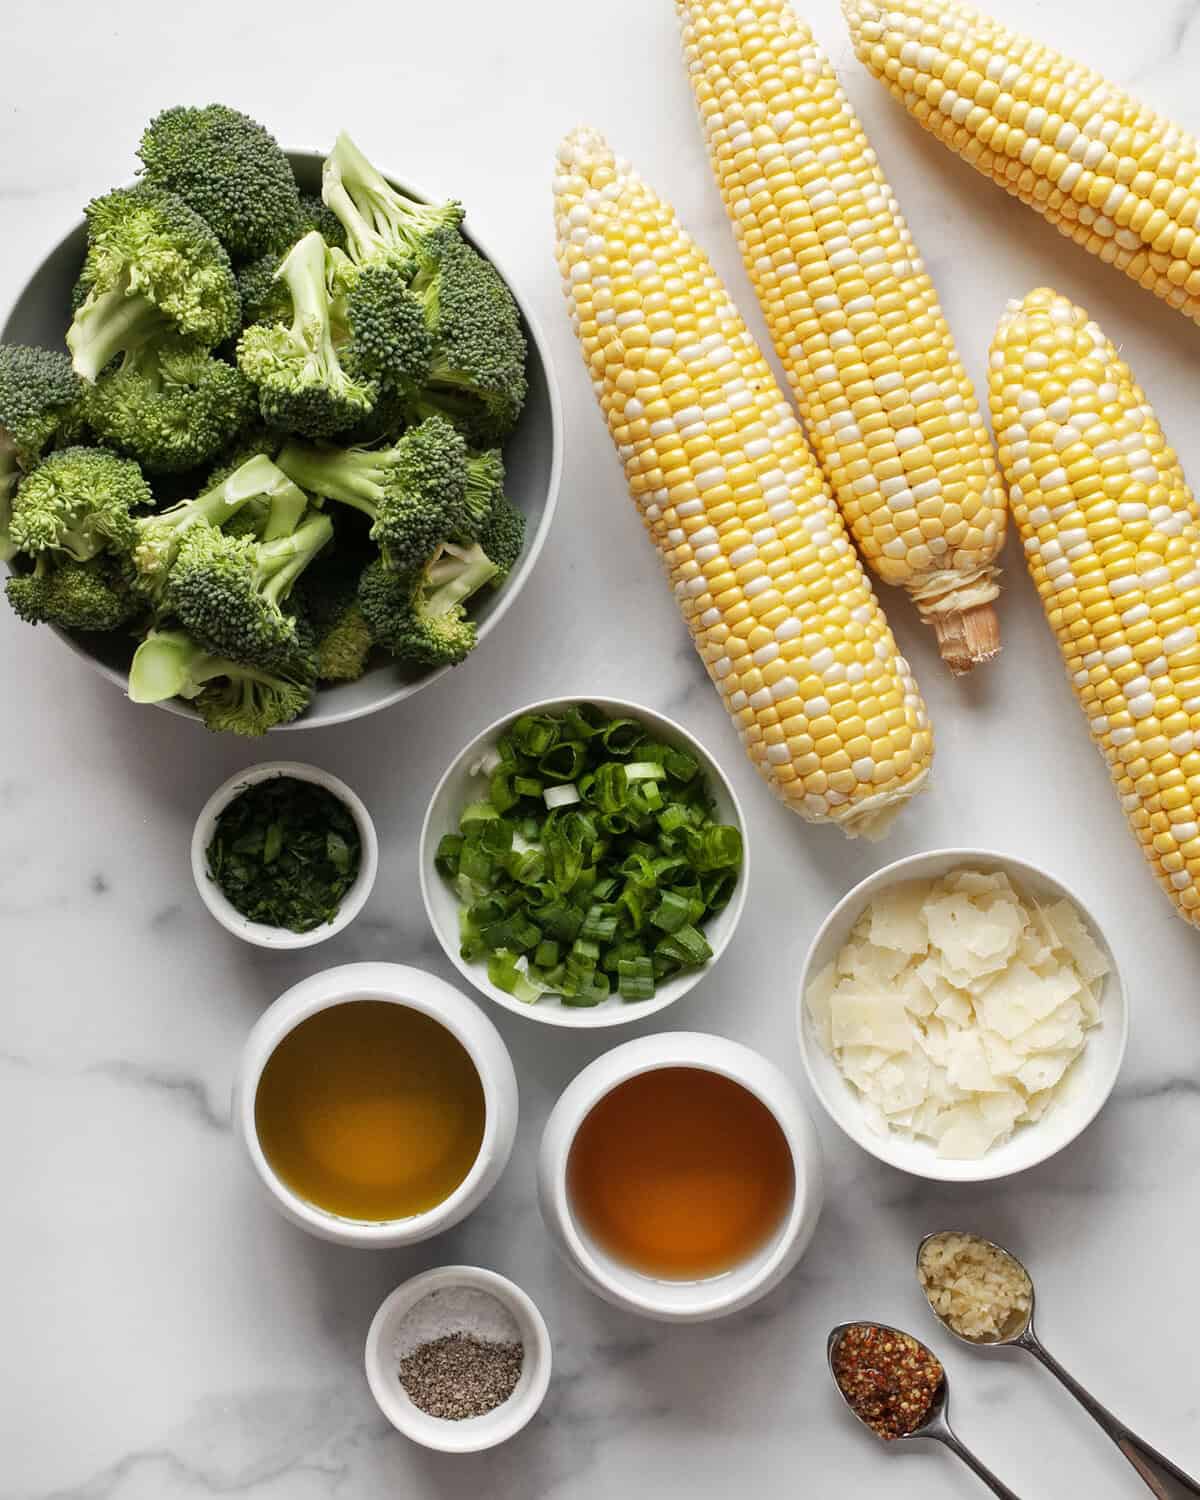 Ingredients including corn, broccoli, scallions, pecorino, parsley, garlic, mustard, white balsamic vinegar and olive oil.